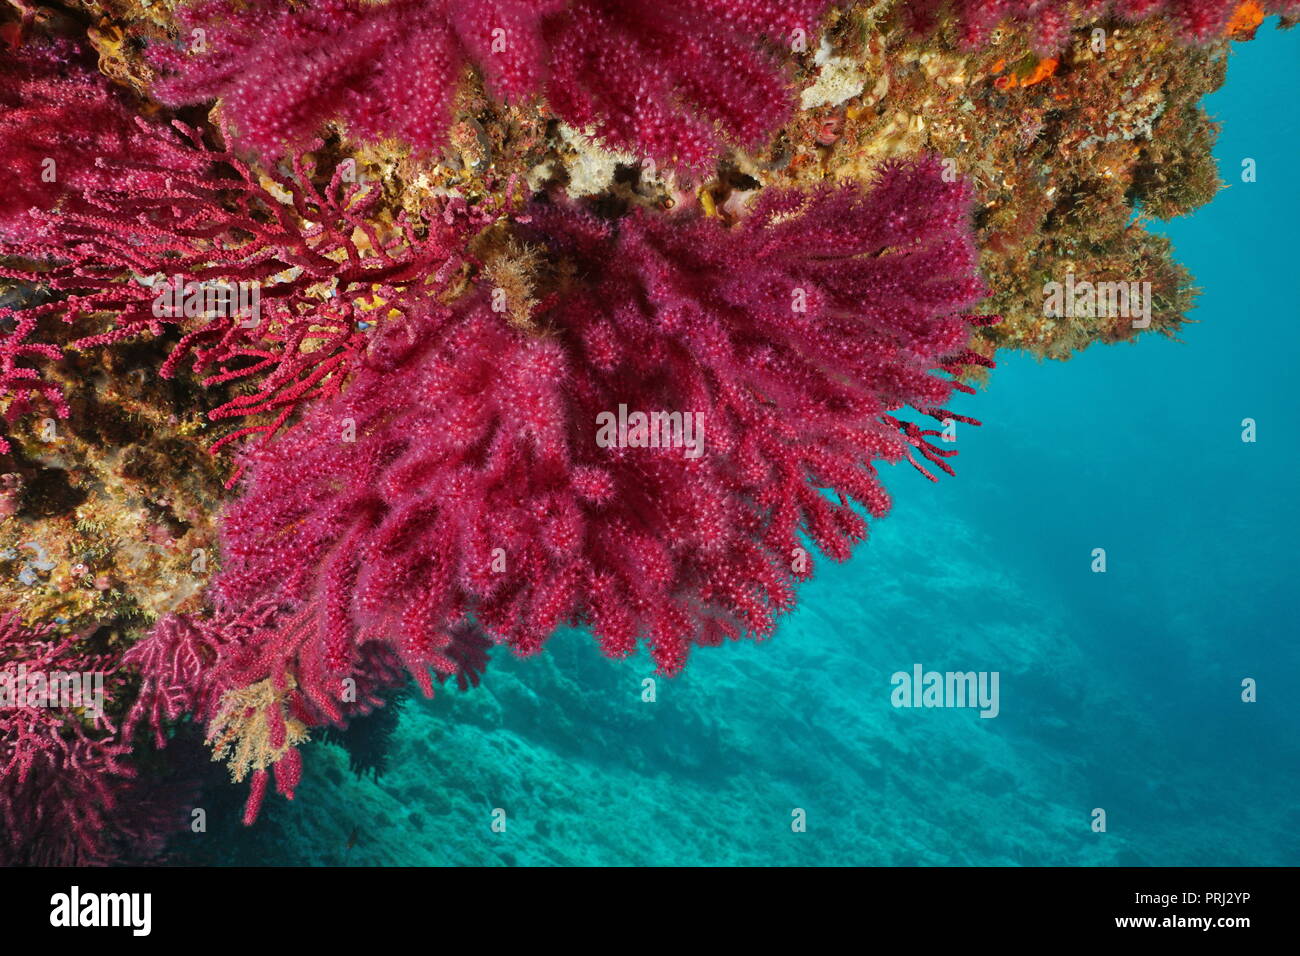 Red gorgonian soft coral, violescent sea-whip Paramuricea clavata, underwater in the Mediterranean sea, Cap de Creus, Costa Brava, Spain Stock Photo